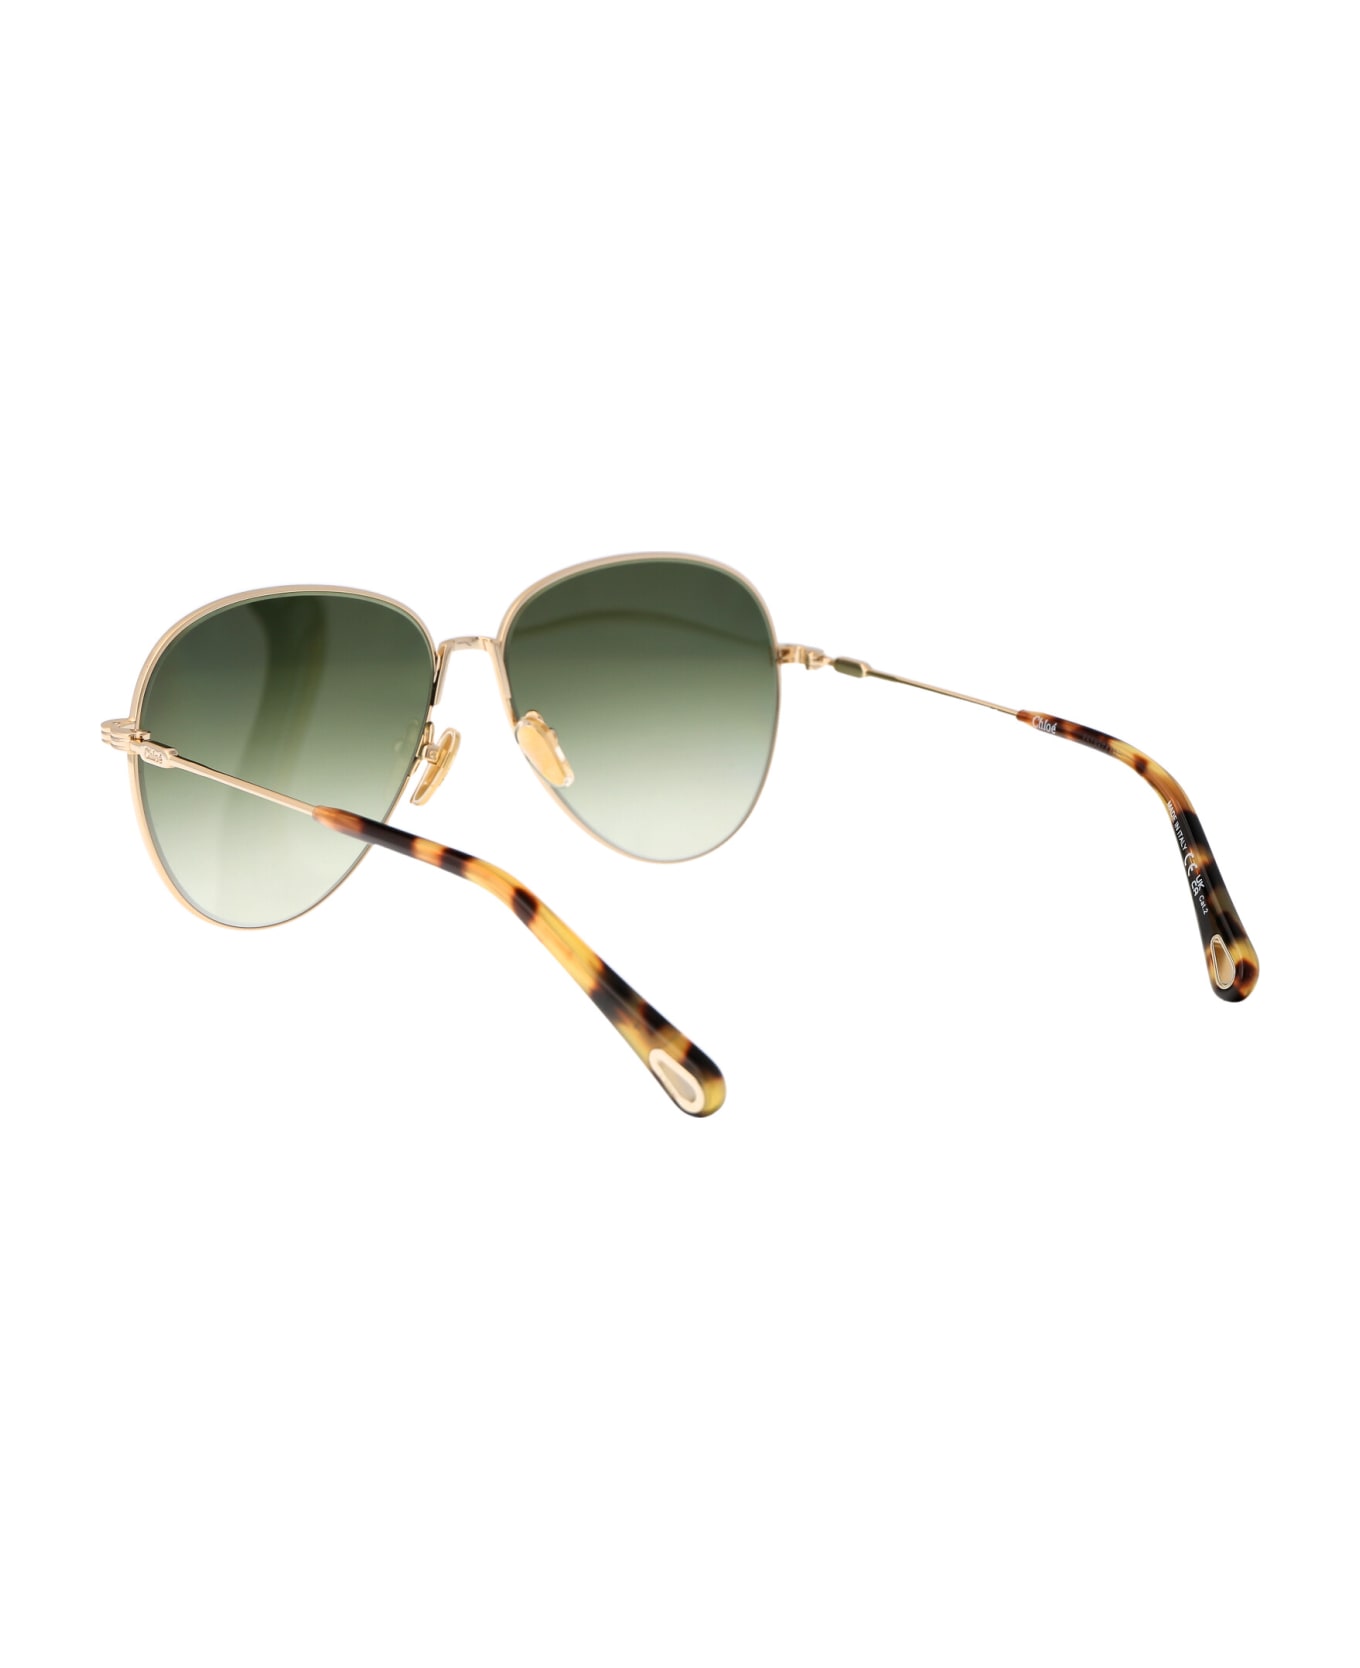 Chloé Eyewear Ch0177s Sunglasses - 004 GOLD GOLD GREEN サングラス